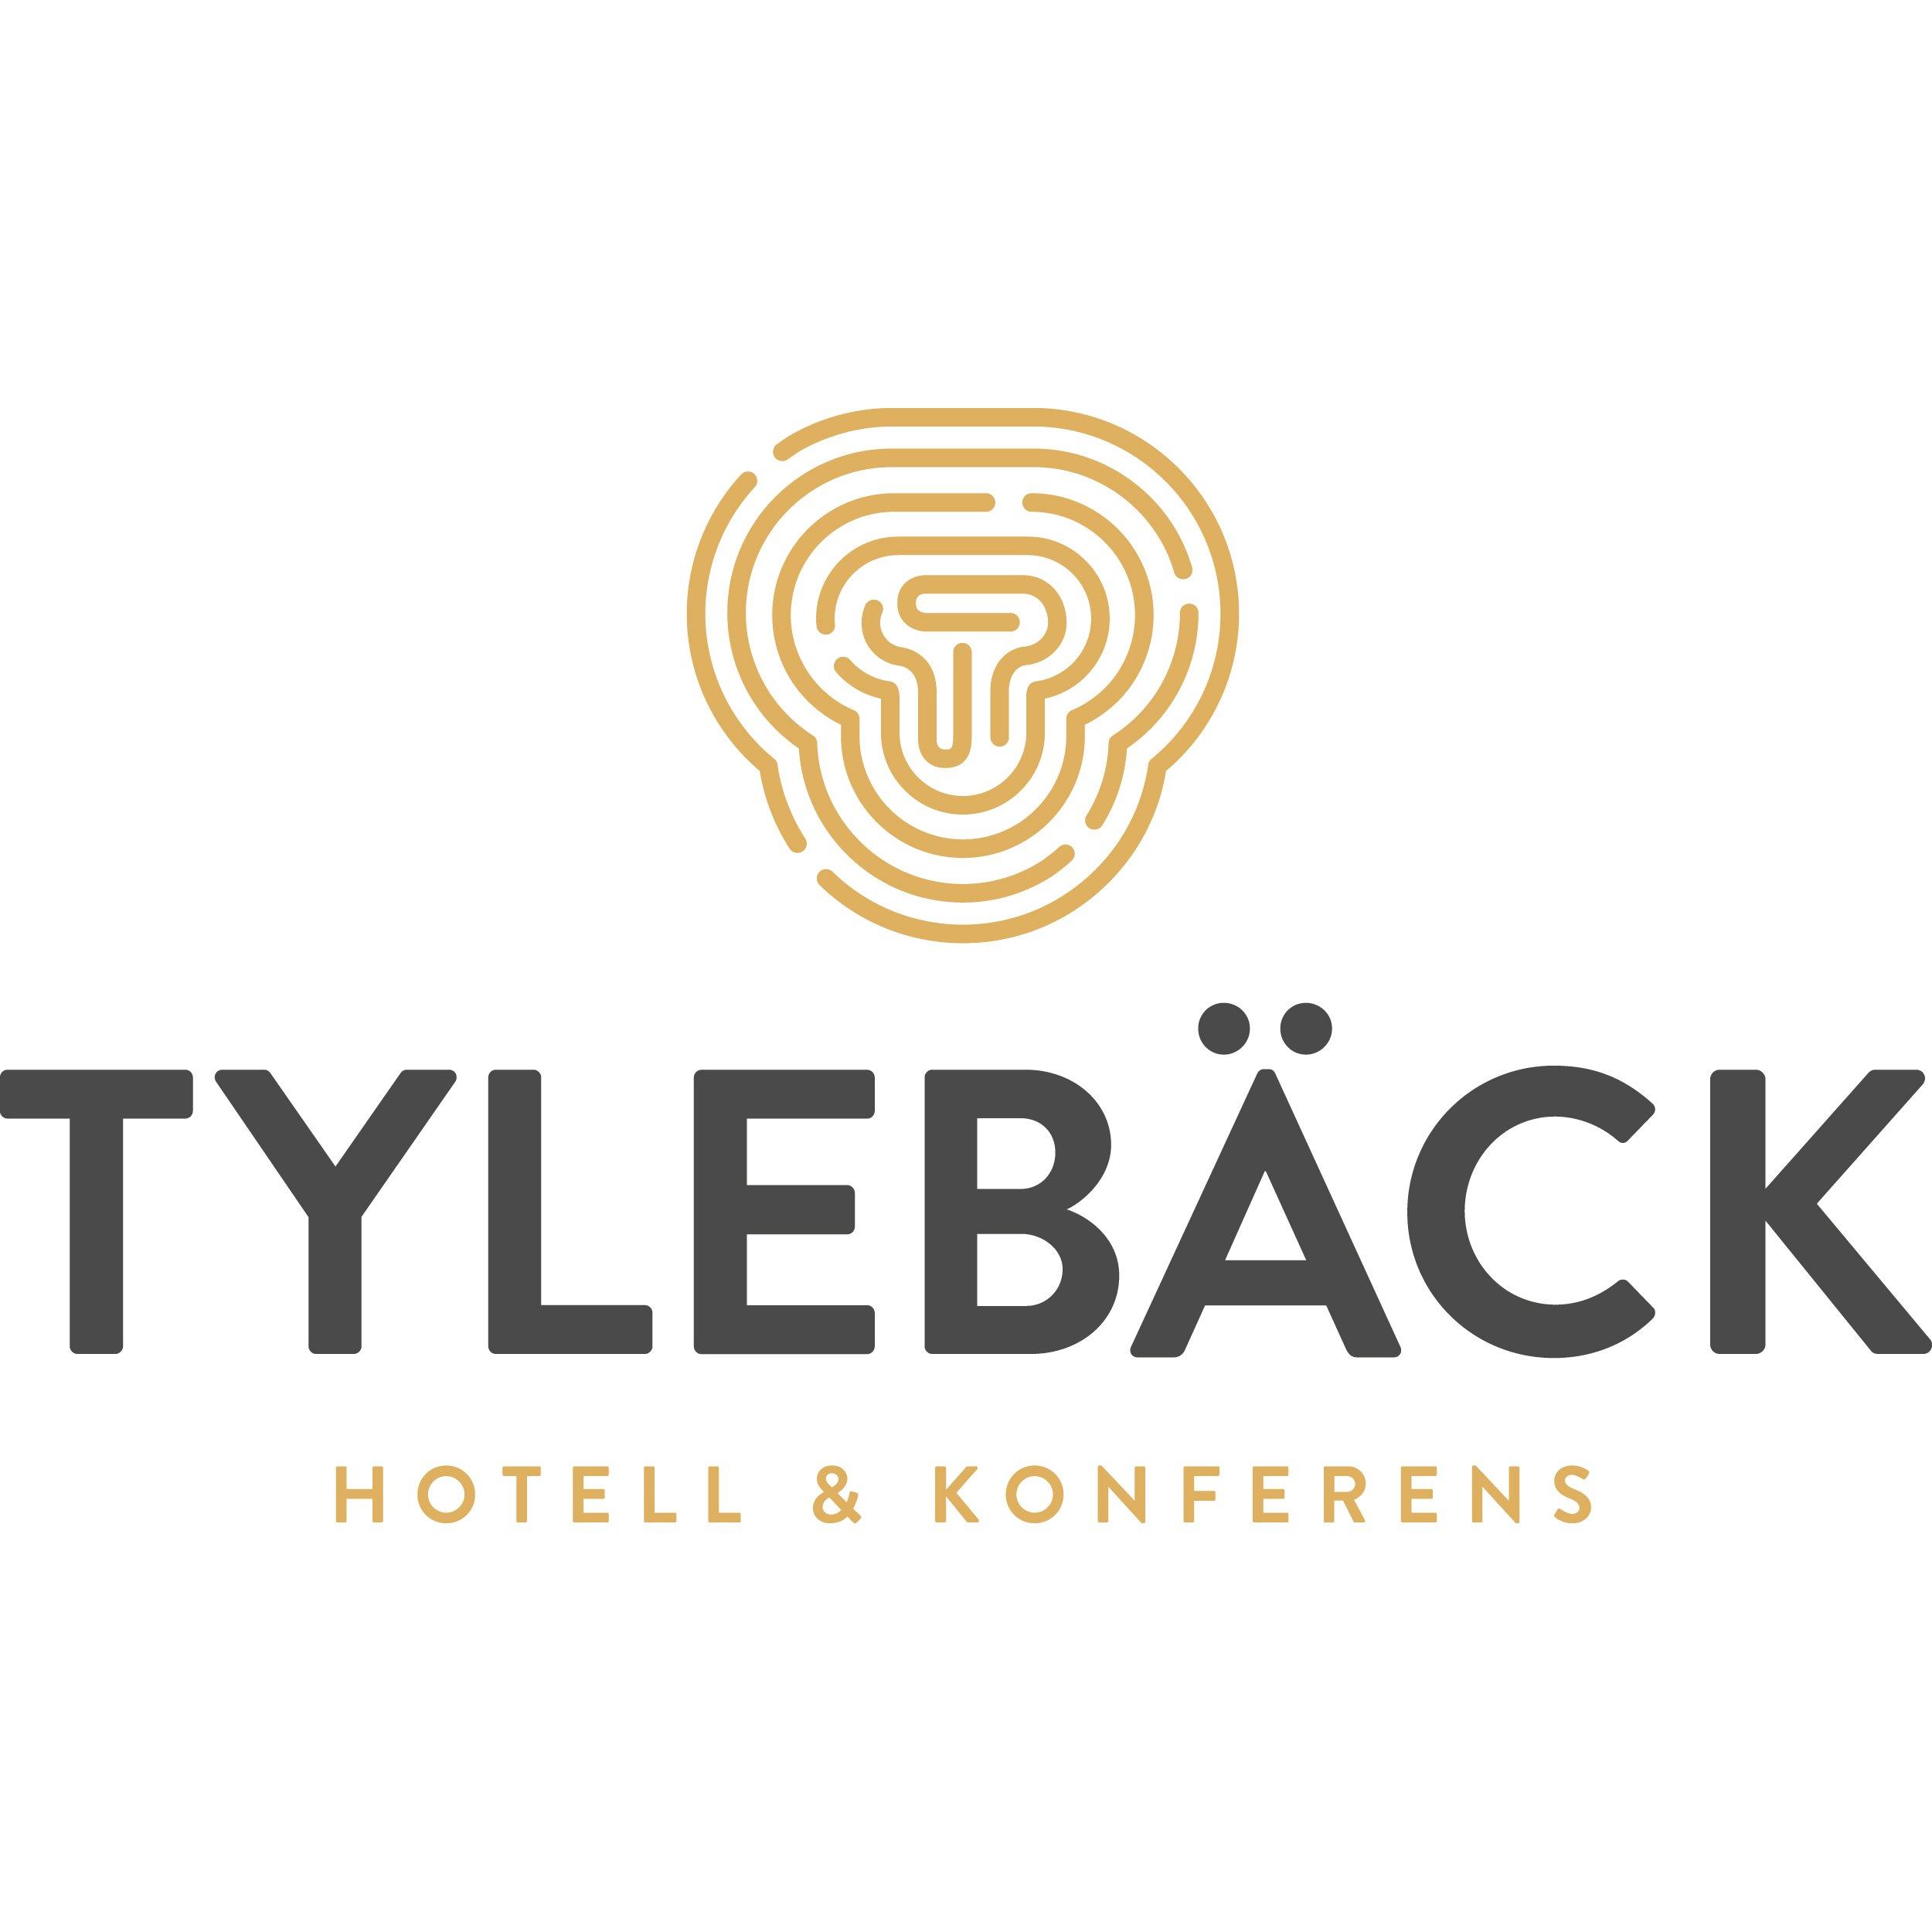 Tylebäck Hotell & Konferens - Hotel - Halmstad - 035-19 18 00 Sweden | ShowMeLocal.com